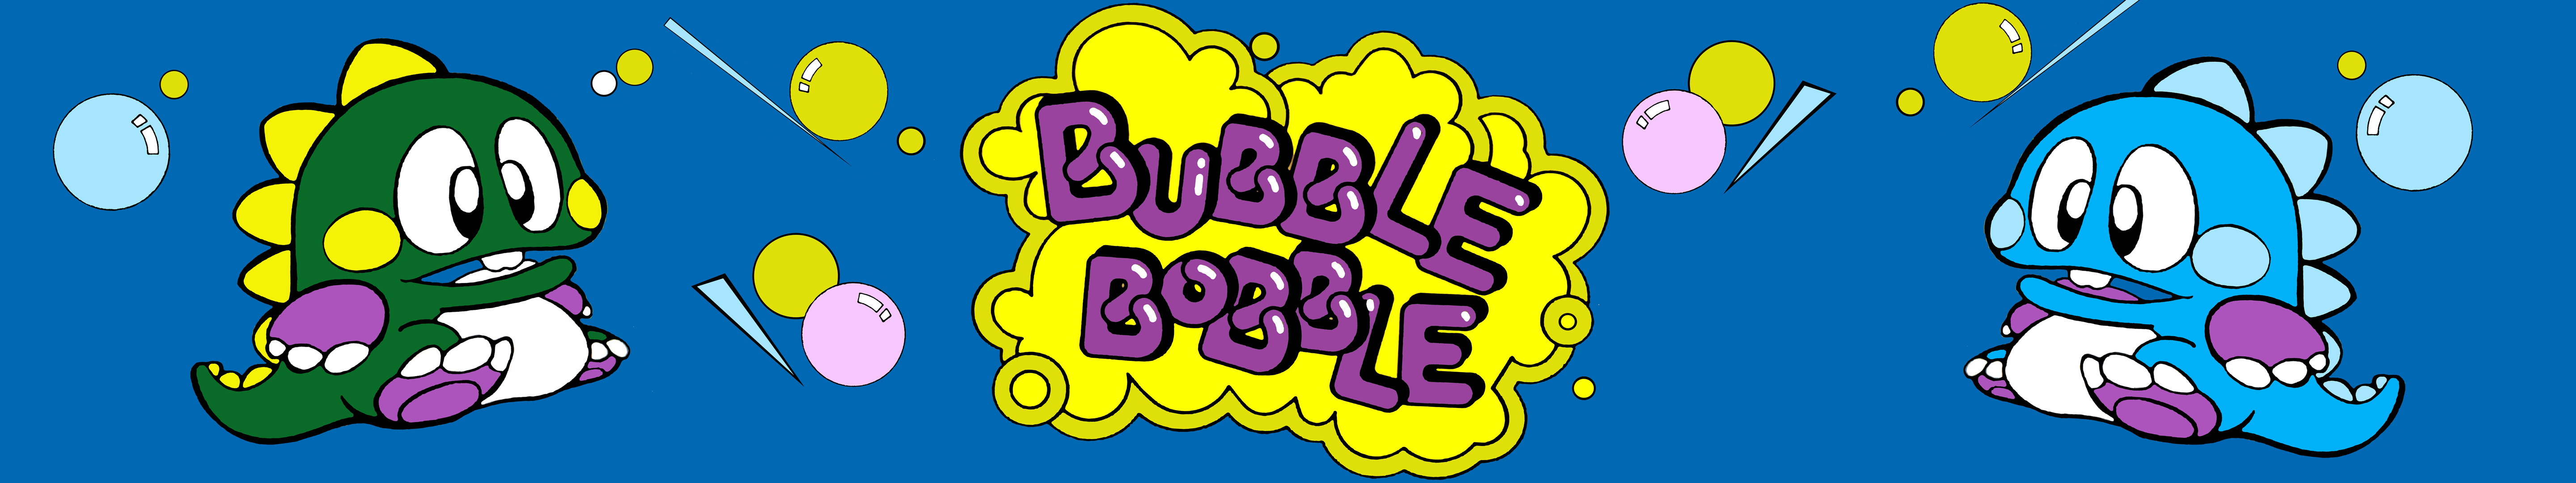 Descargar fondos de escritorio de Bubble Bobble HD